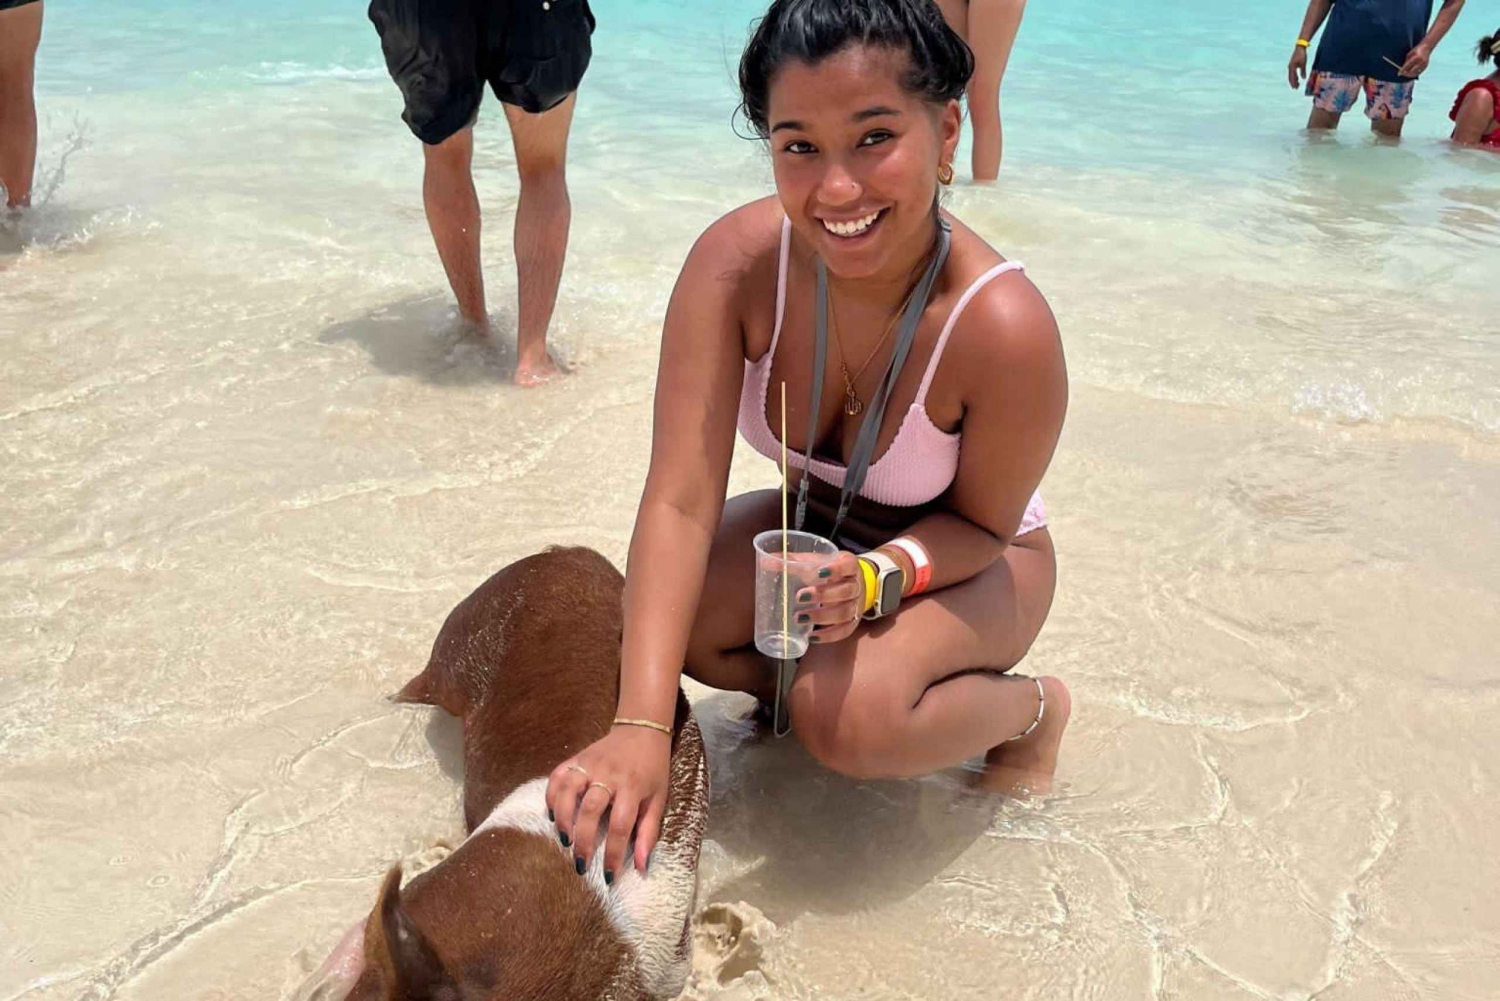 Nassau: Swimming Pigs, Snorkeling w/Turtles Lunch Beach Club